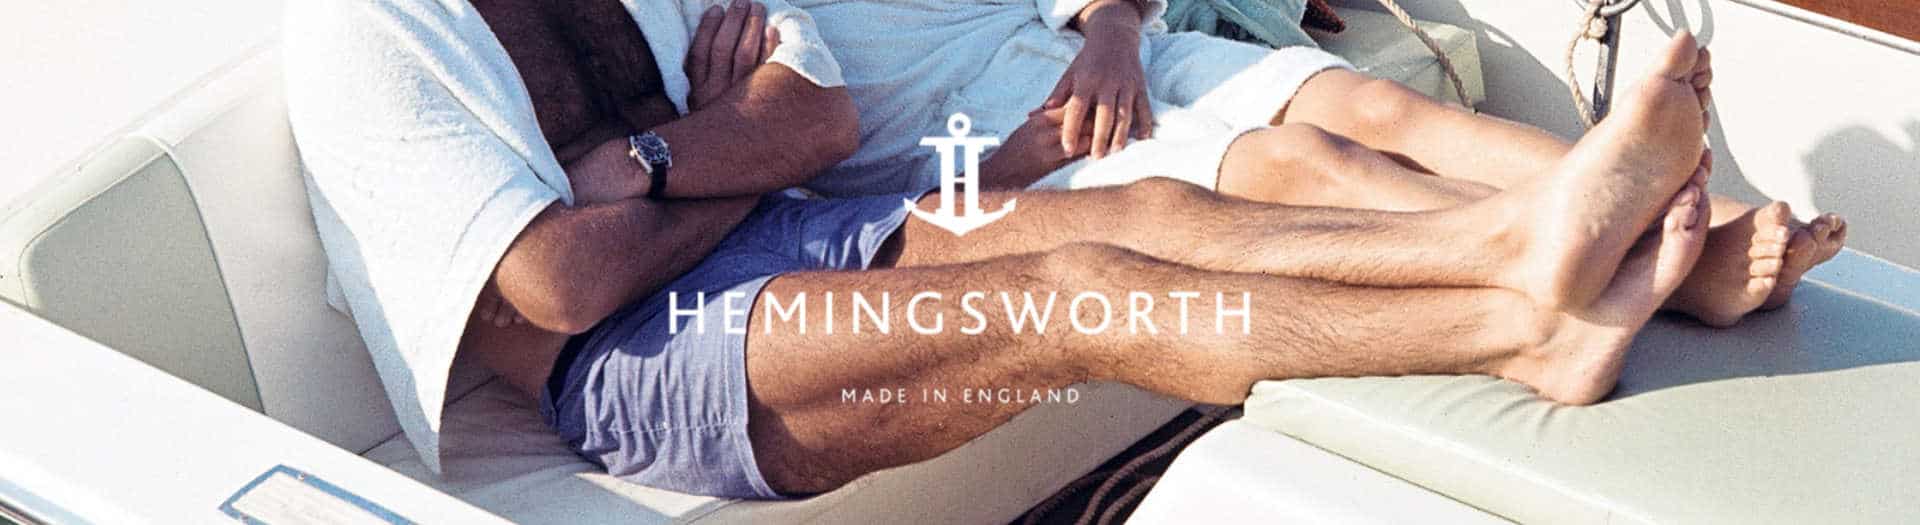 Hemingsworth made in UK clothing